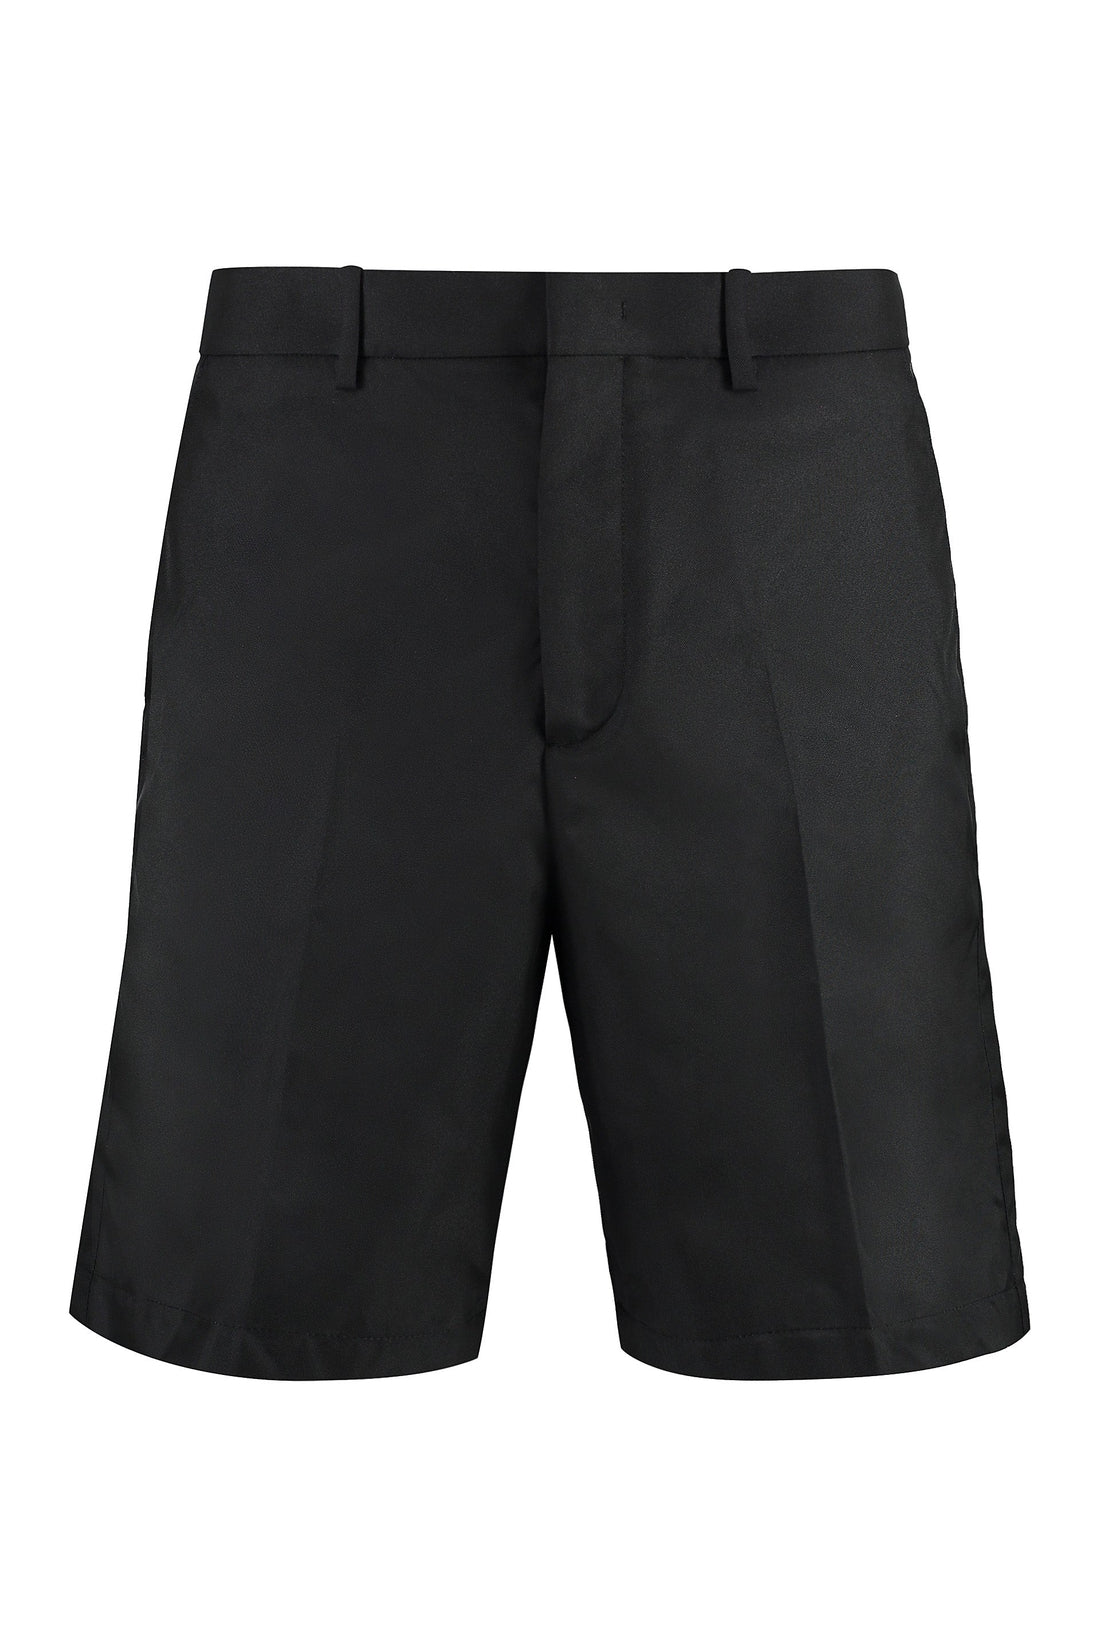 Valentino-OUTLET-SALE-Nylon bermuda shorts-ARCHIVIST